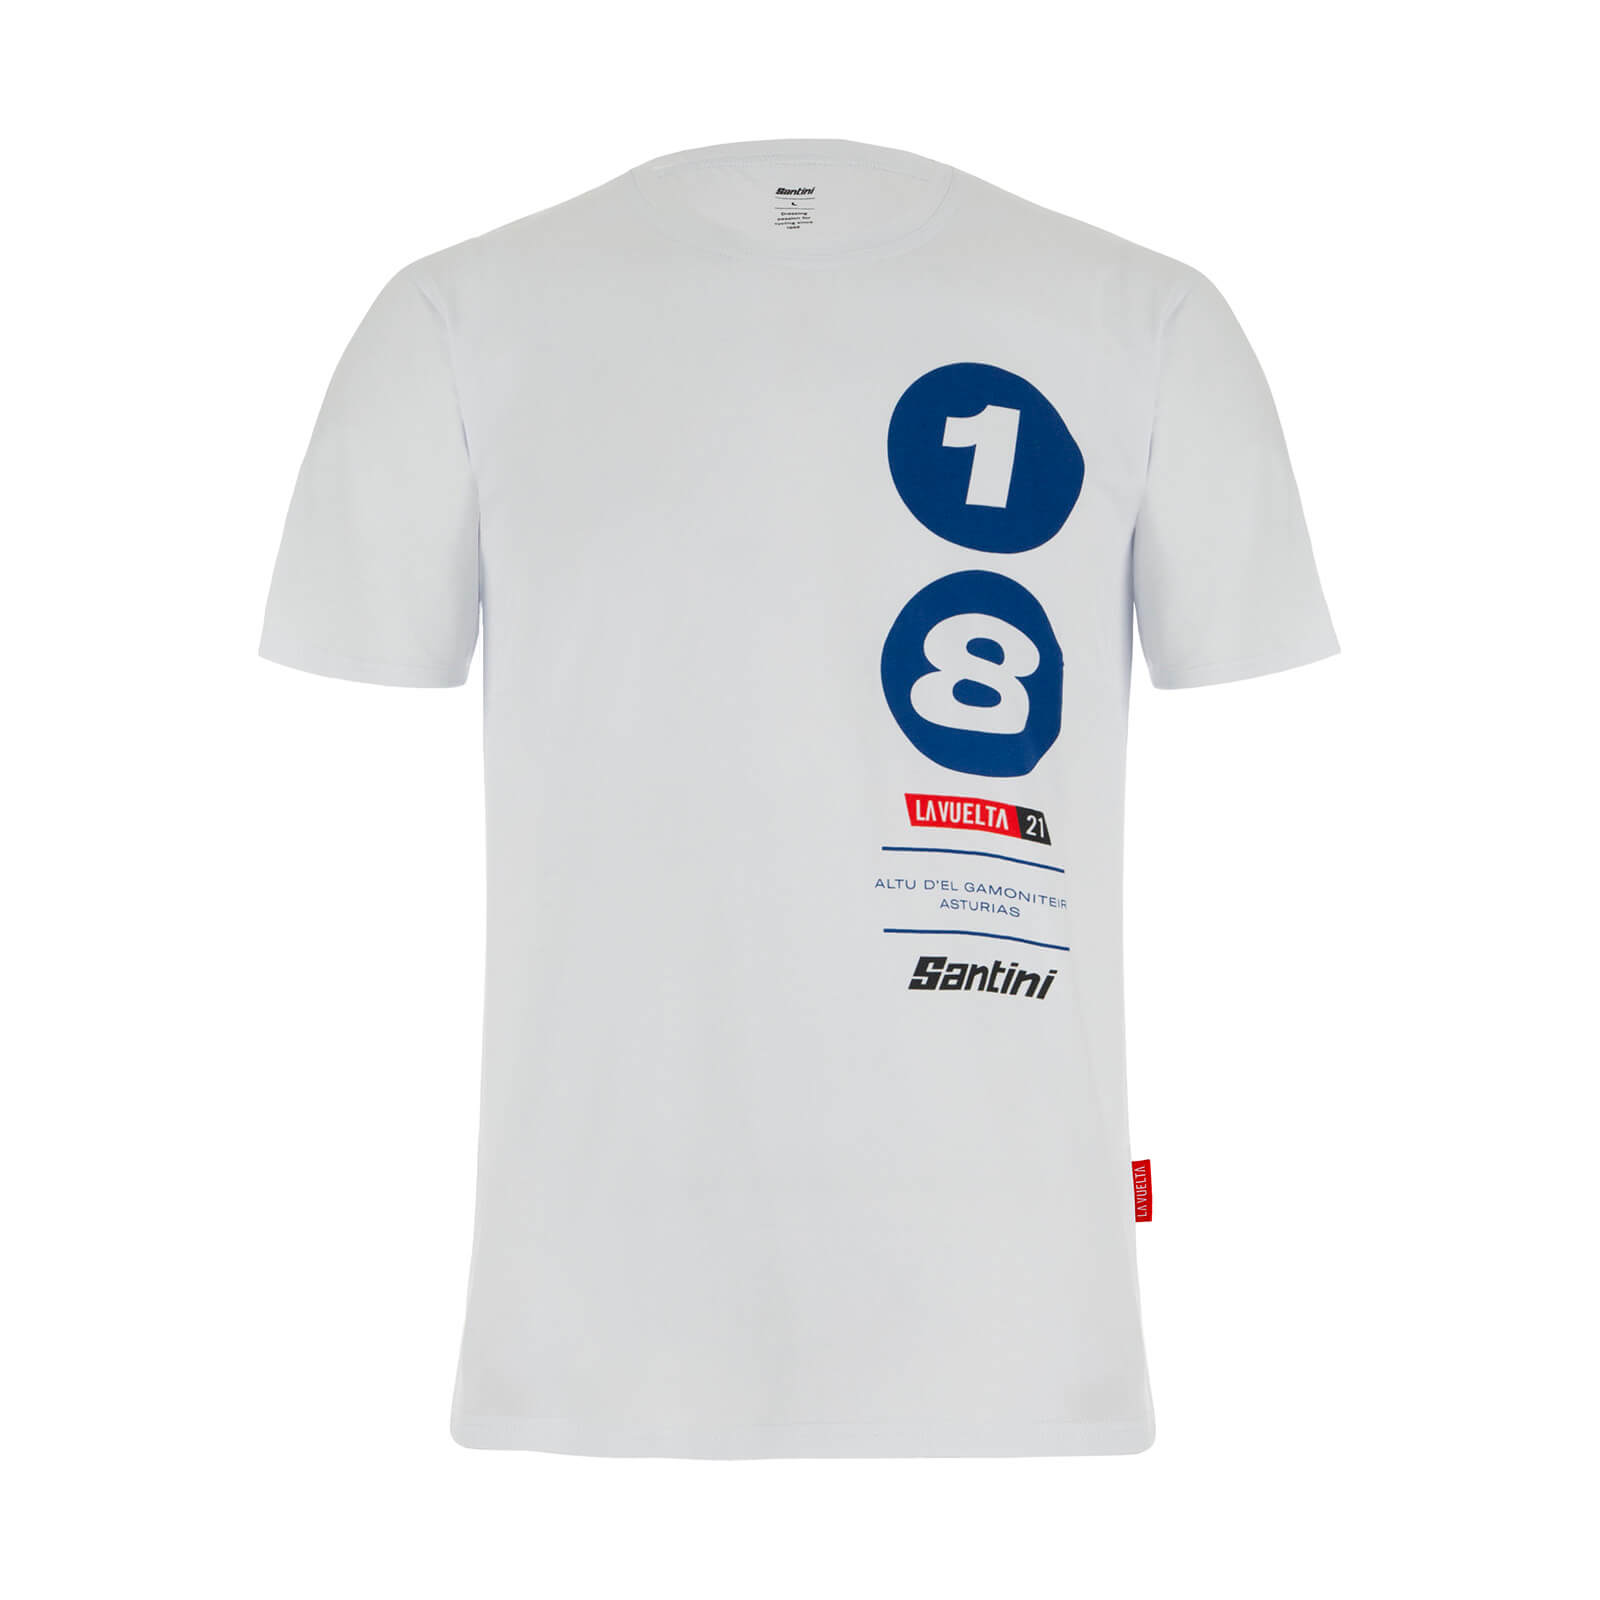 Santini La Vuelta 2021 Gamoniteiru T-Shirt - M